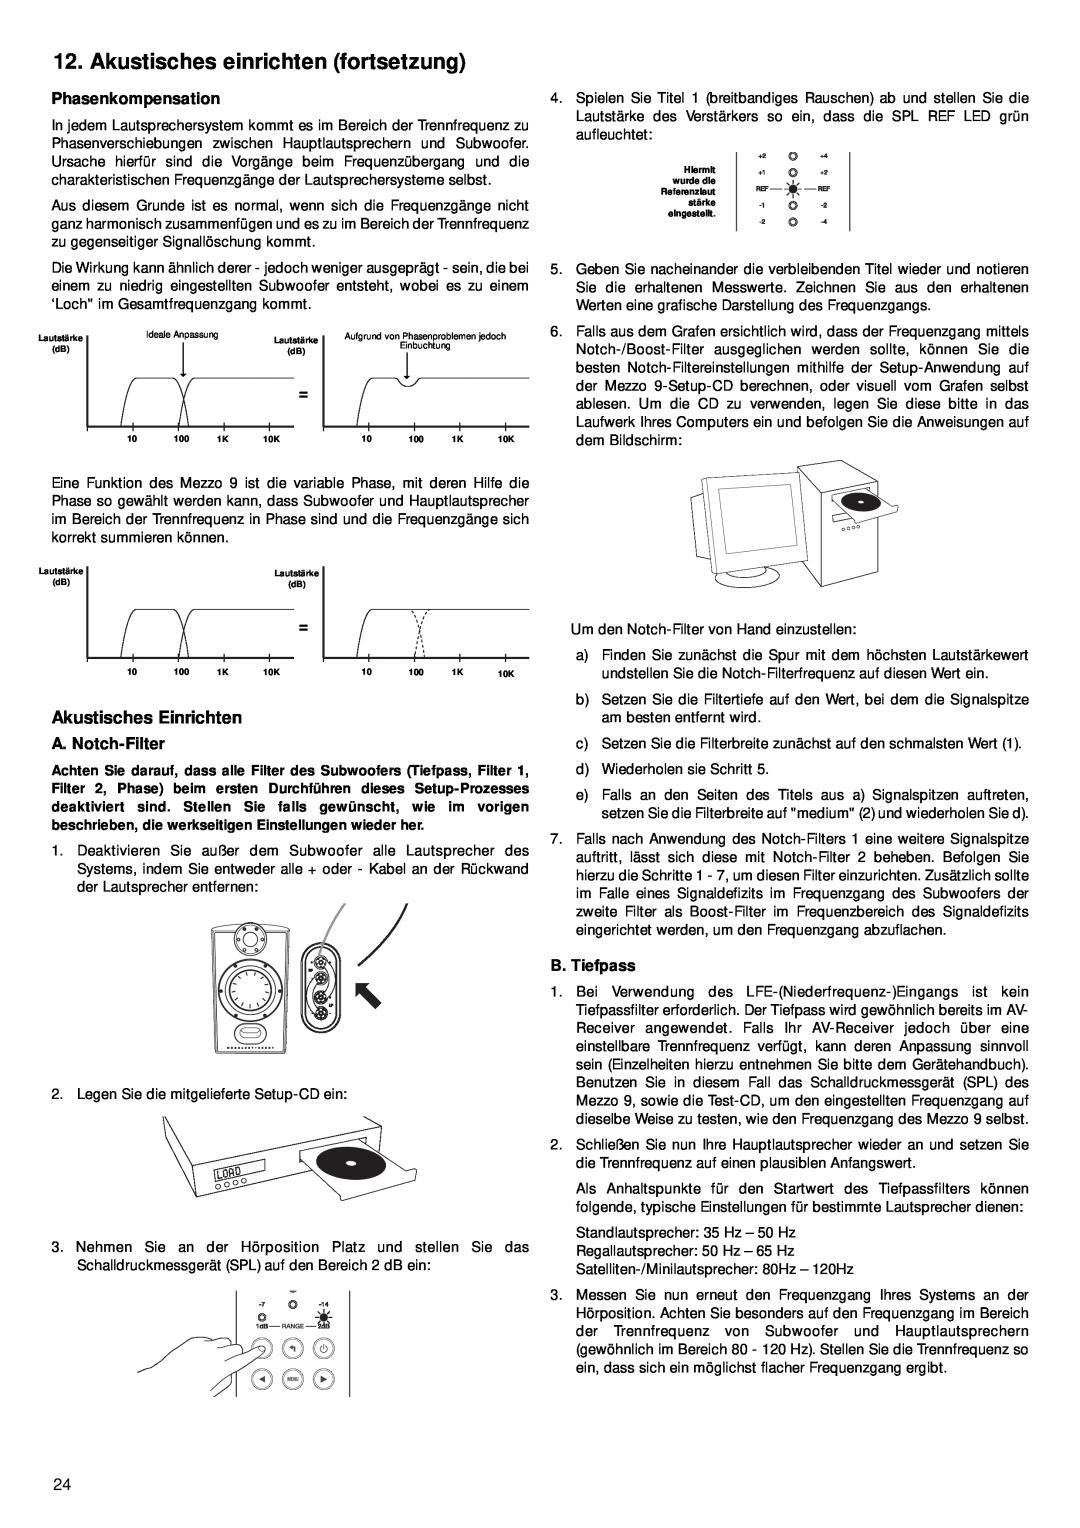 Mordaunt-Short 9 manual Akustisches einrichten fortsetzung, Akustisches Einrichten, Phasenkompensation, A. Notch-Filter 